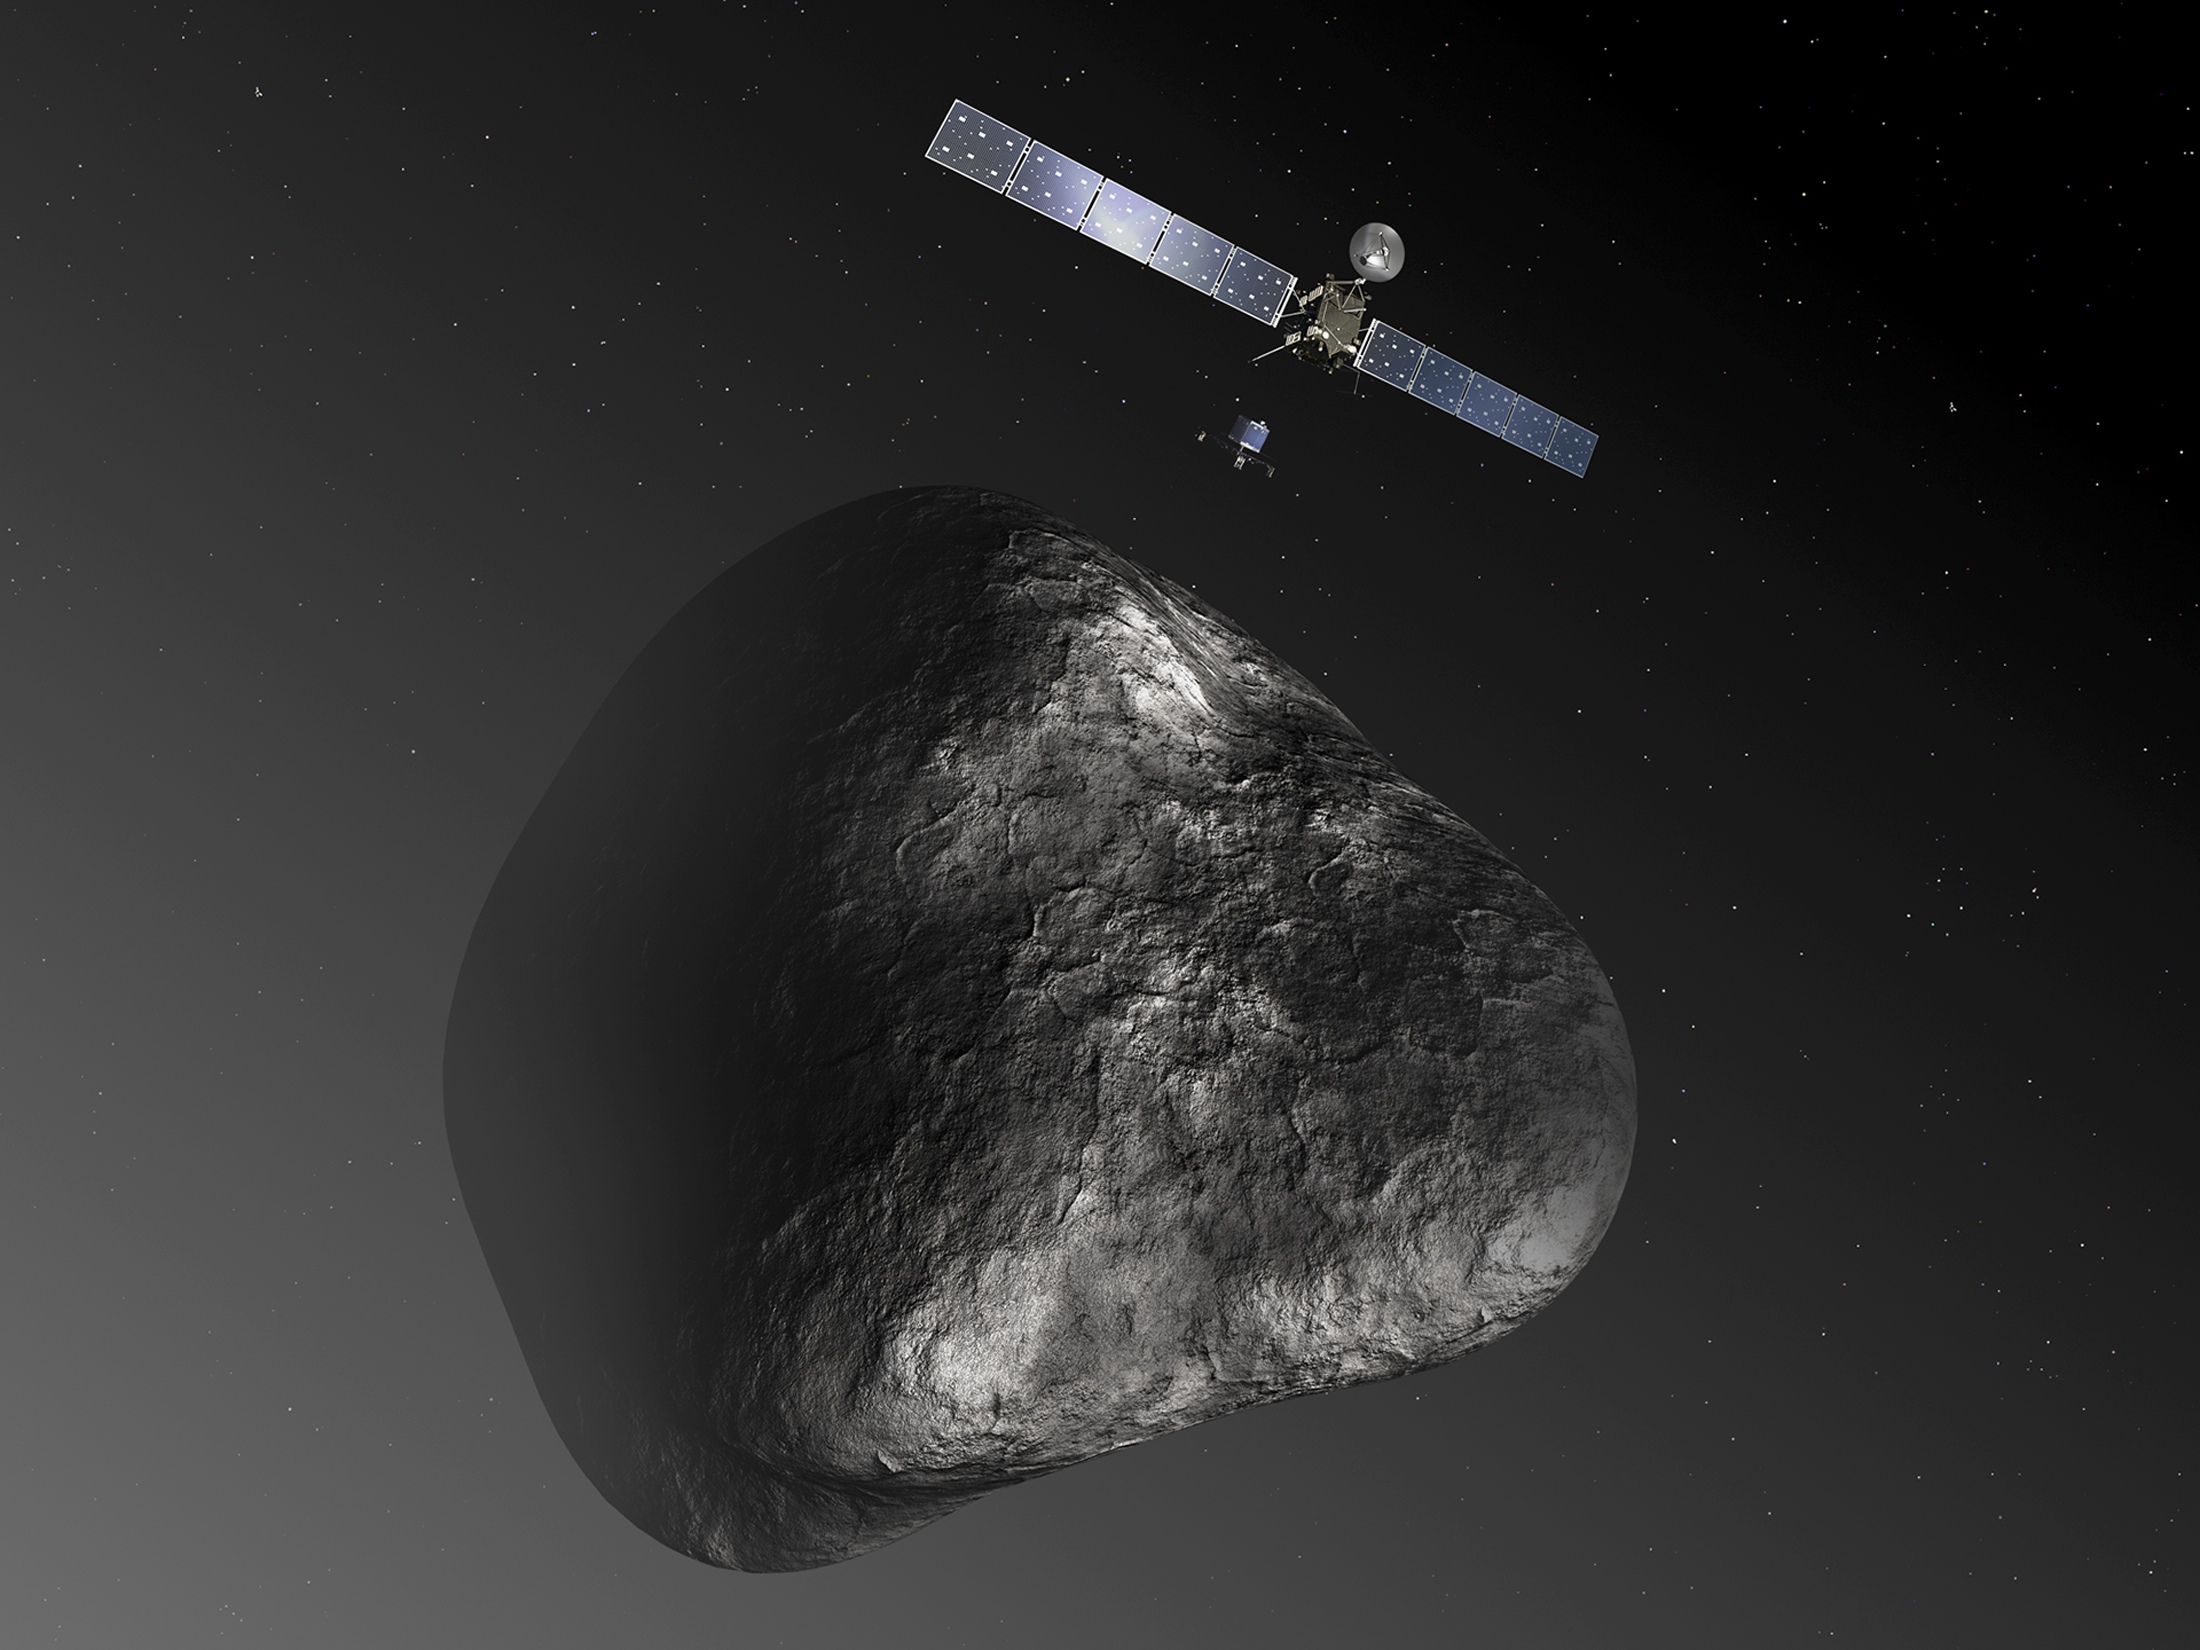 A handout image of an artist's impression, not to scale, of the Rosetta orbiter deploying the Philae lander to comet 67P/Churyumov-Gerasimenko